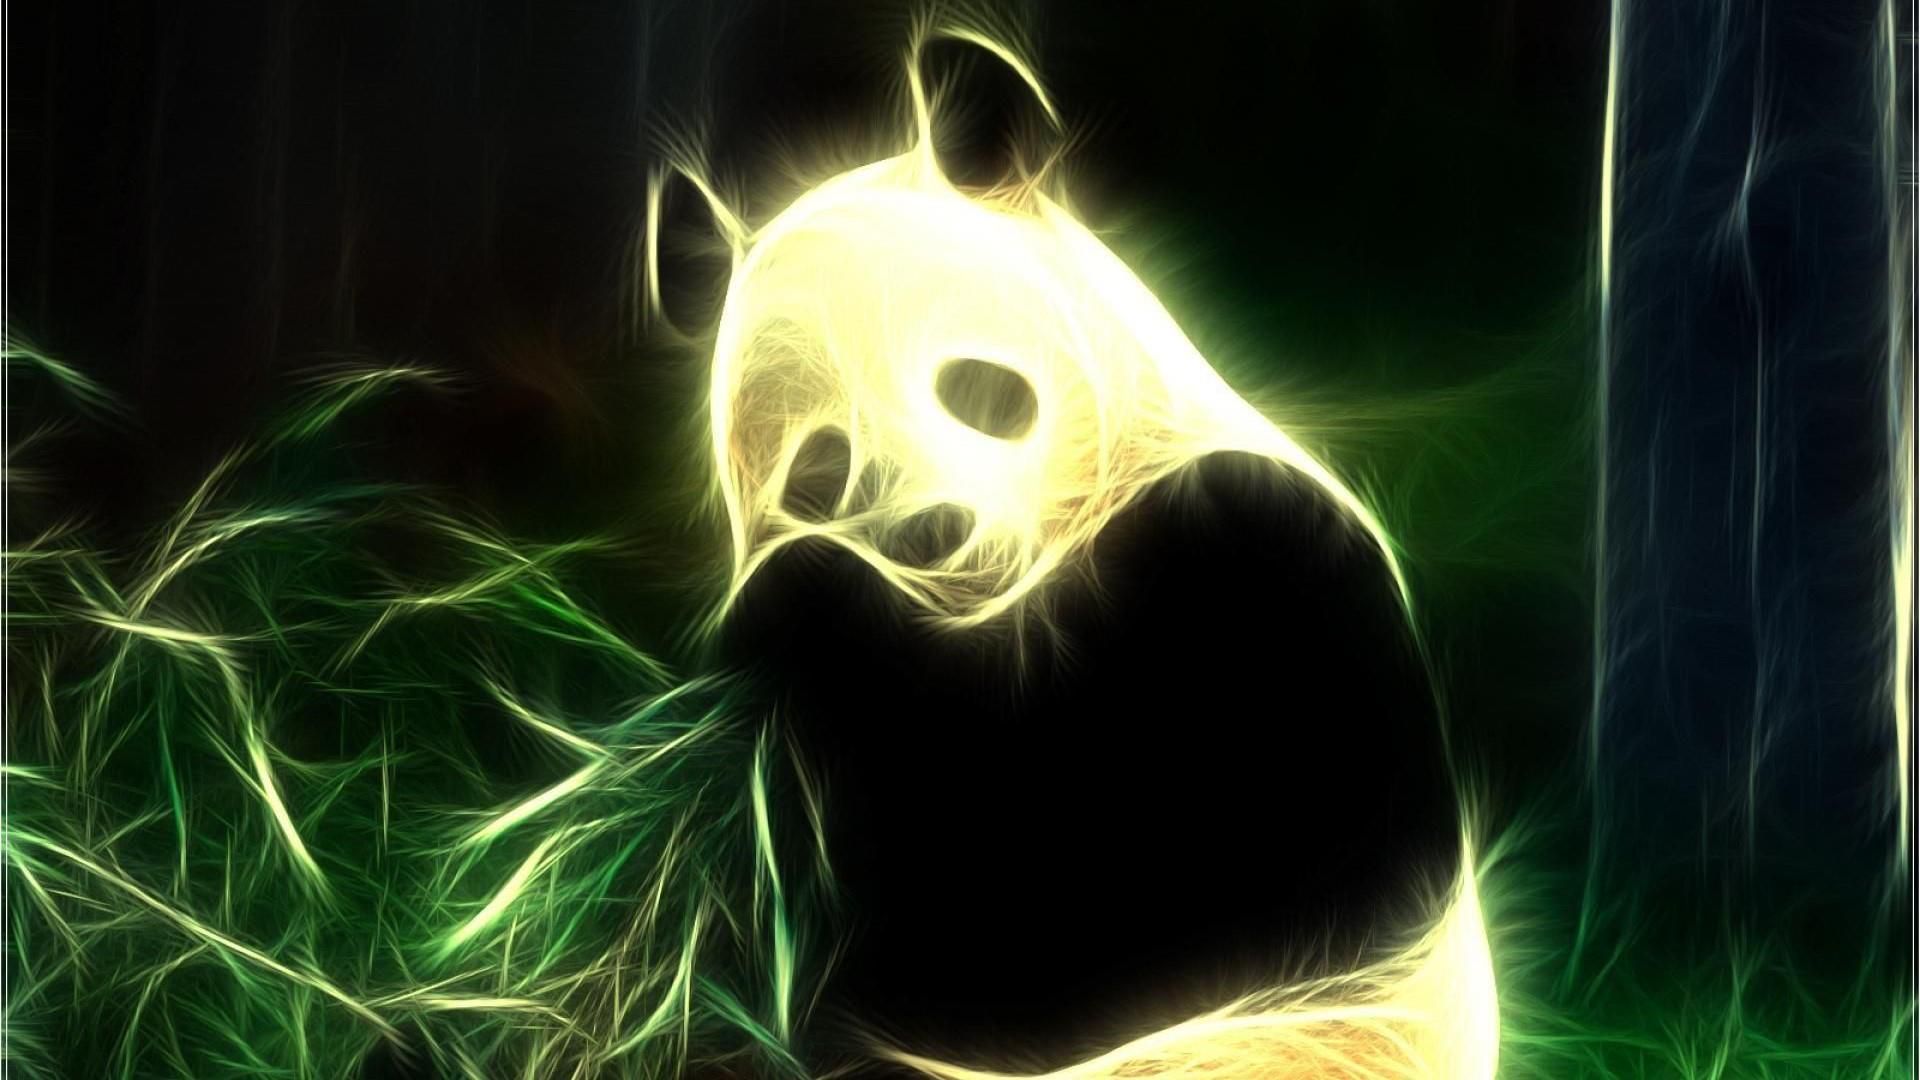 Neon wallpaper panda cave. Panda wallpaper, Neon wallpaper, Neon